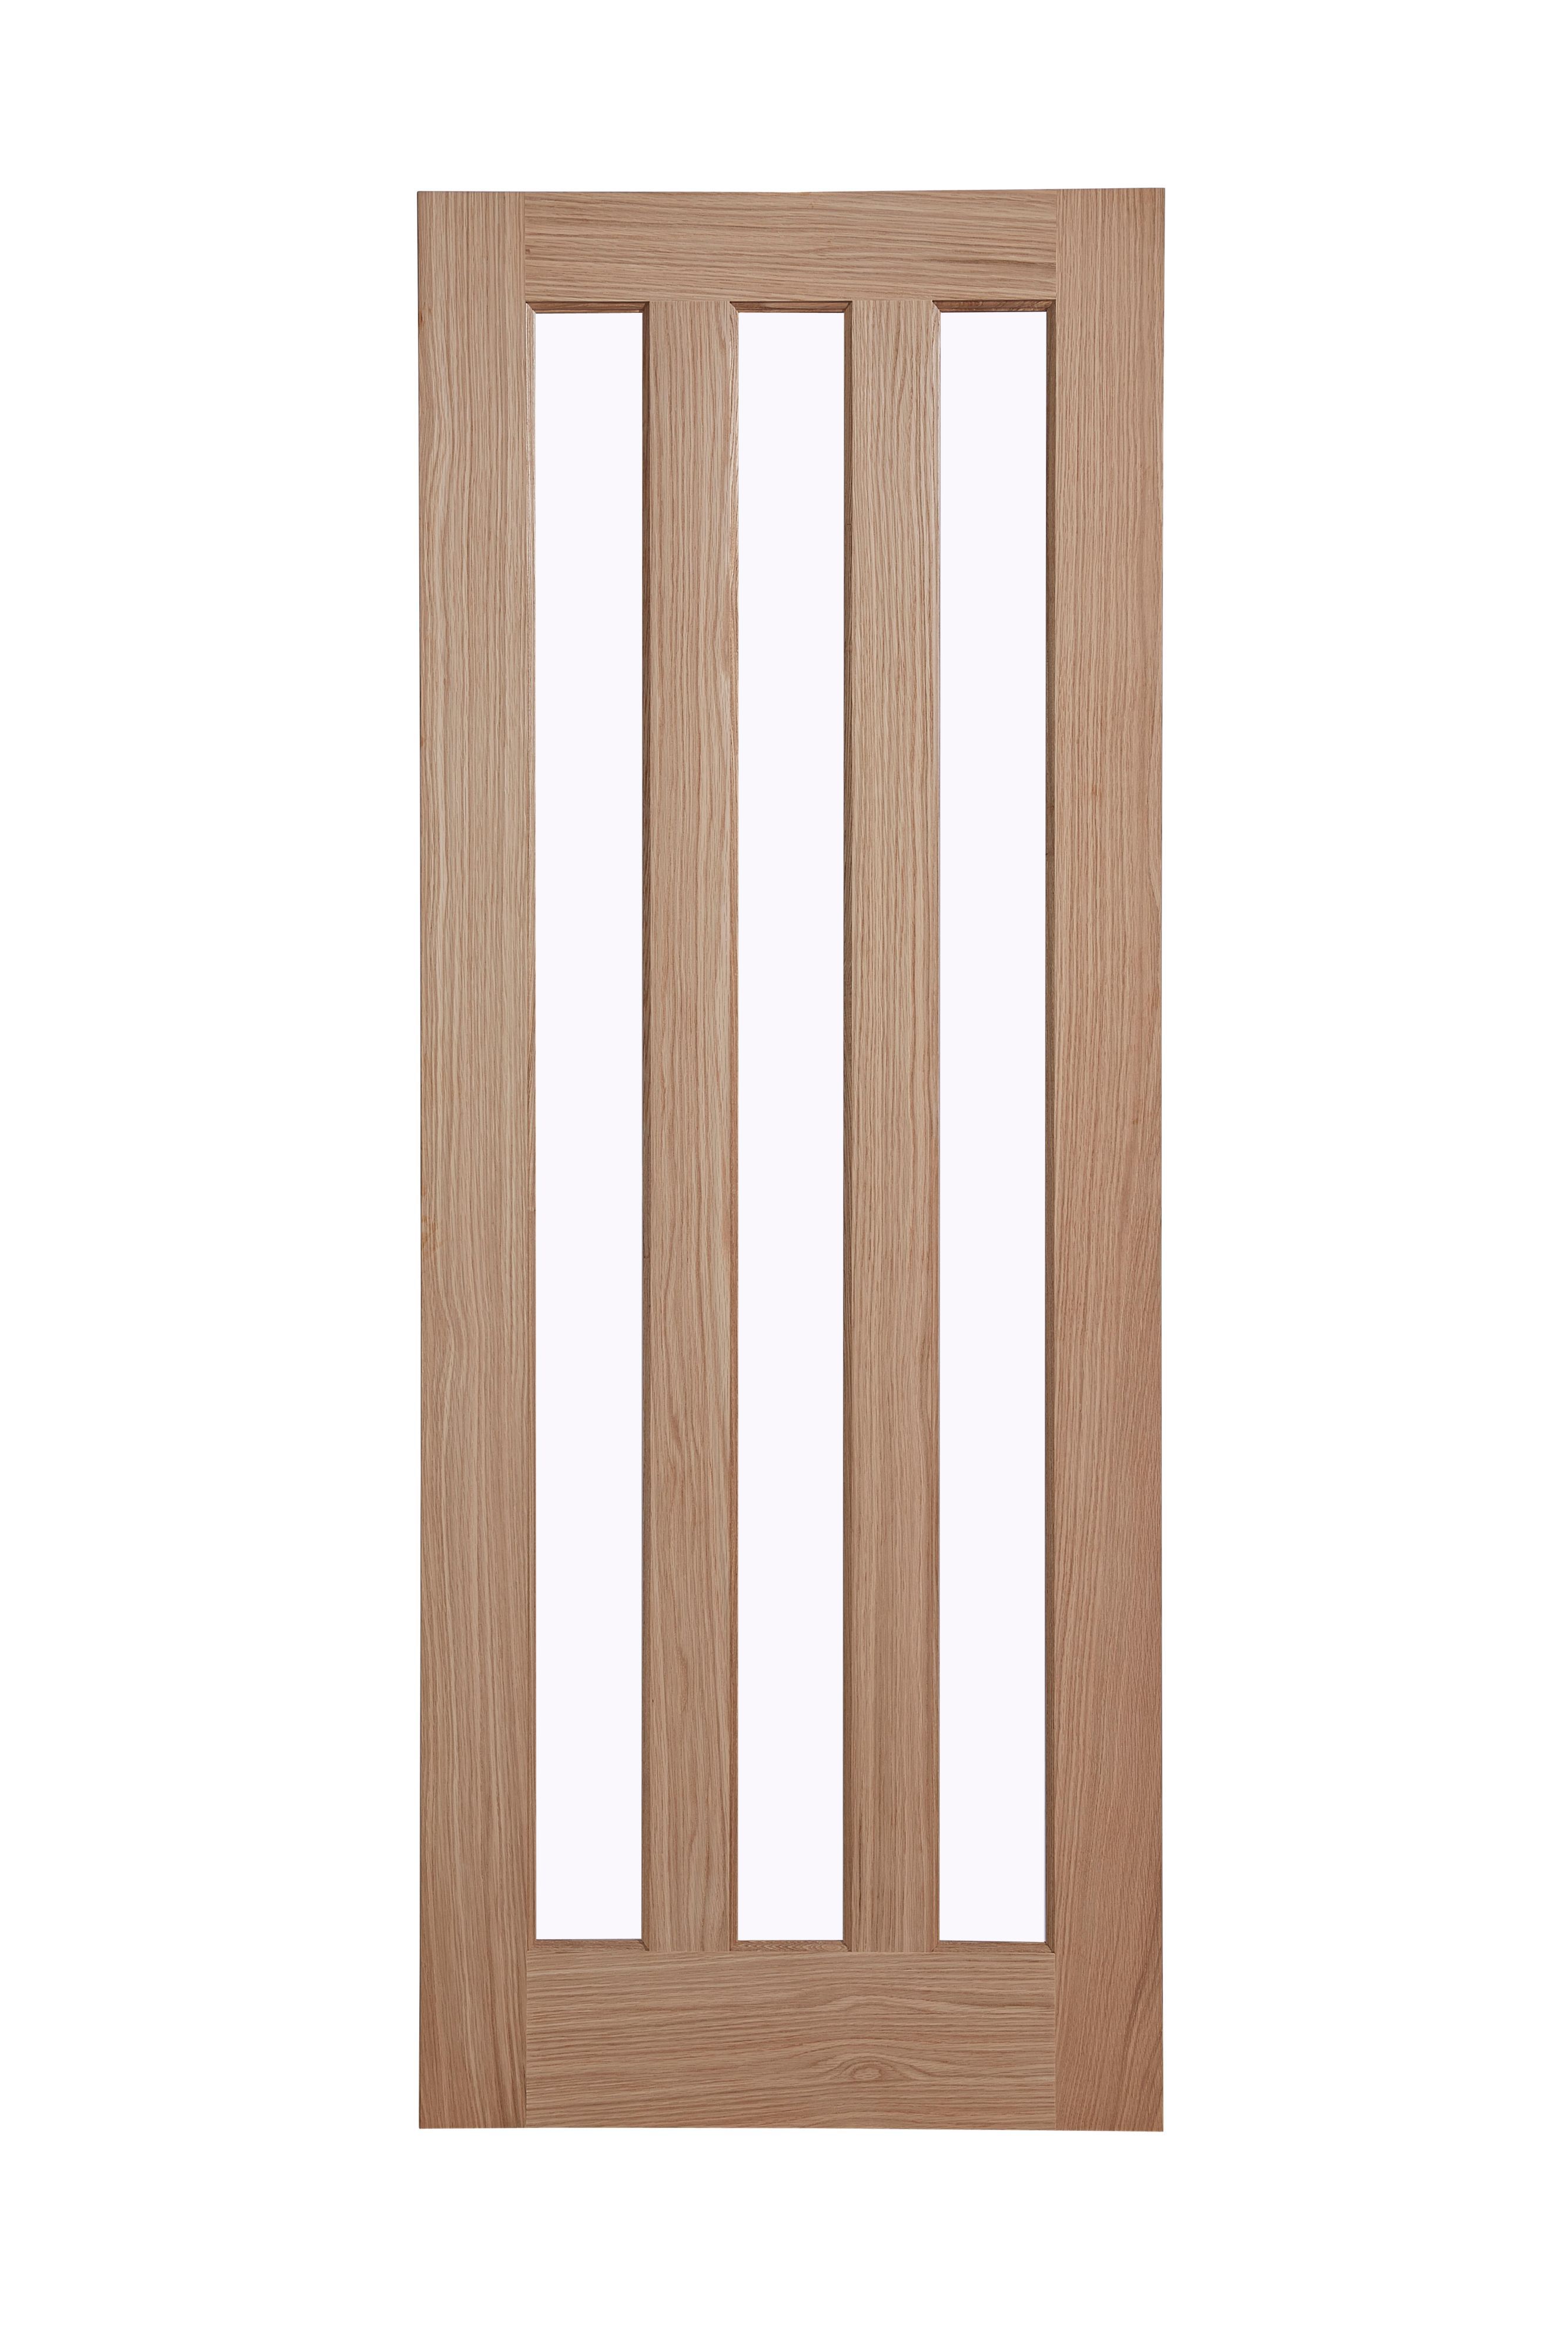 Vertical 3 Panel Glazed Oak Veneer Lh Rh Internal Door H 1981mm W 762mm Departments Diy At B Q